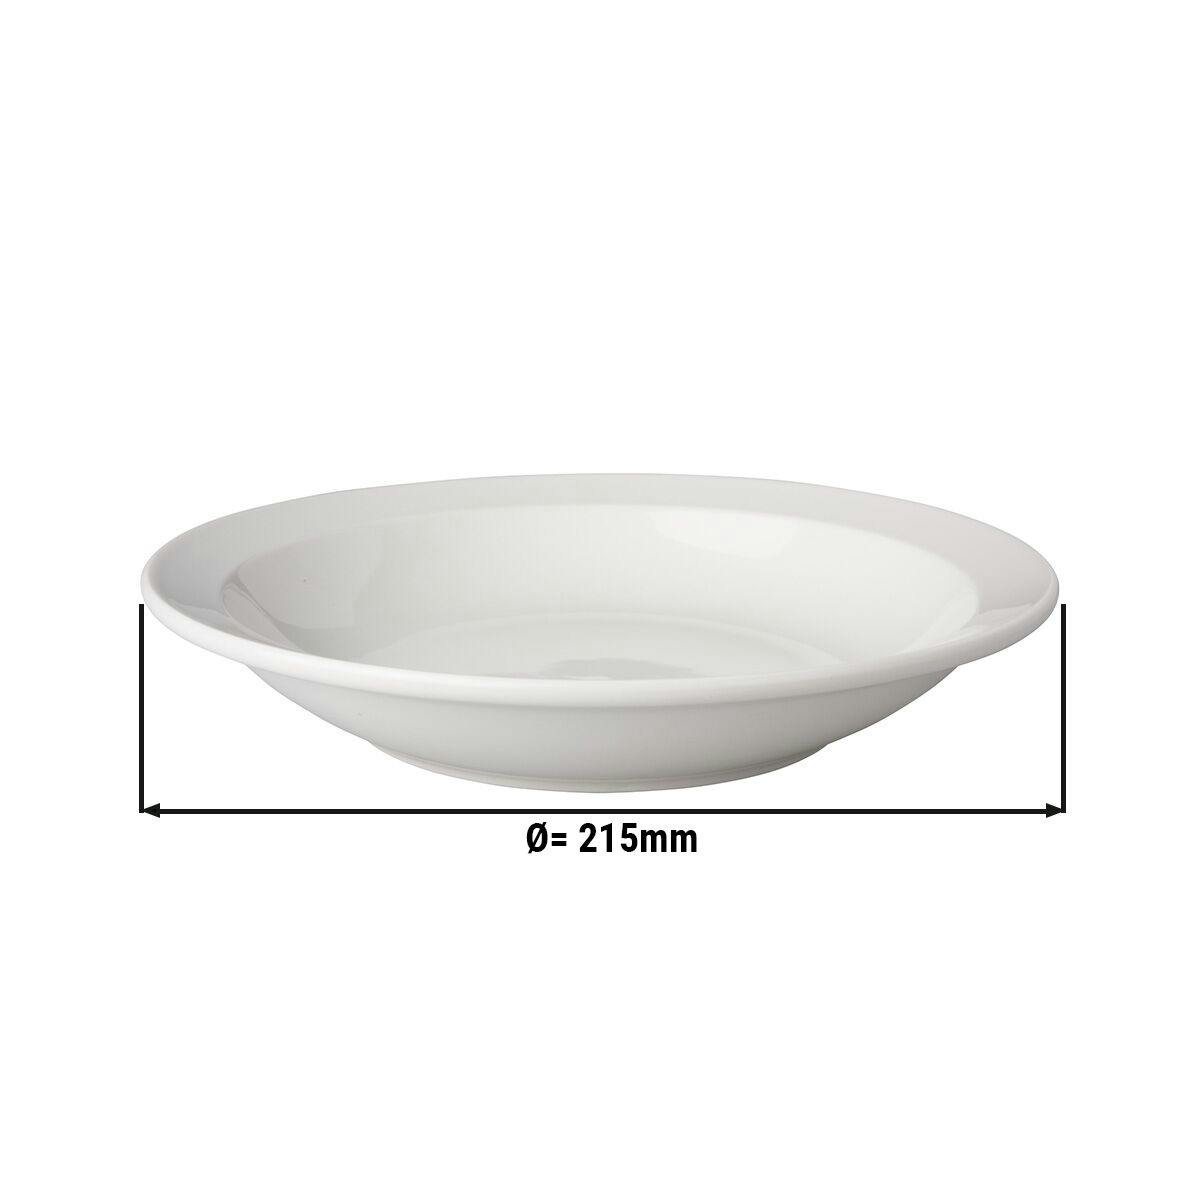 (12 pieces) BUDGETLINE - Plate deep Mammoet - Ø 21,5 cm - White